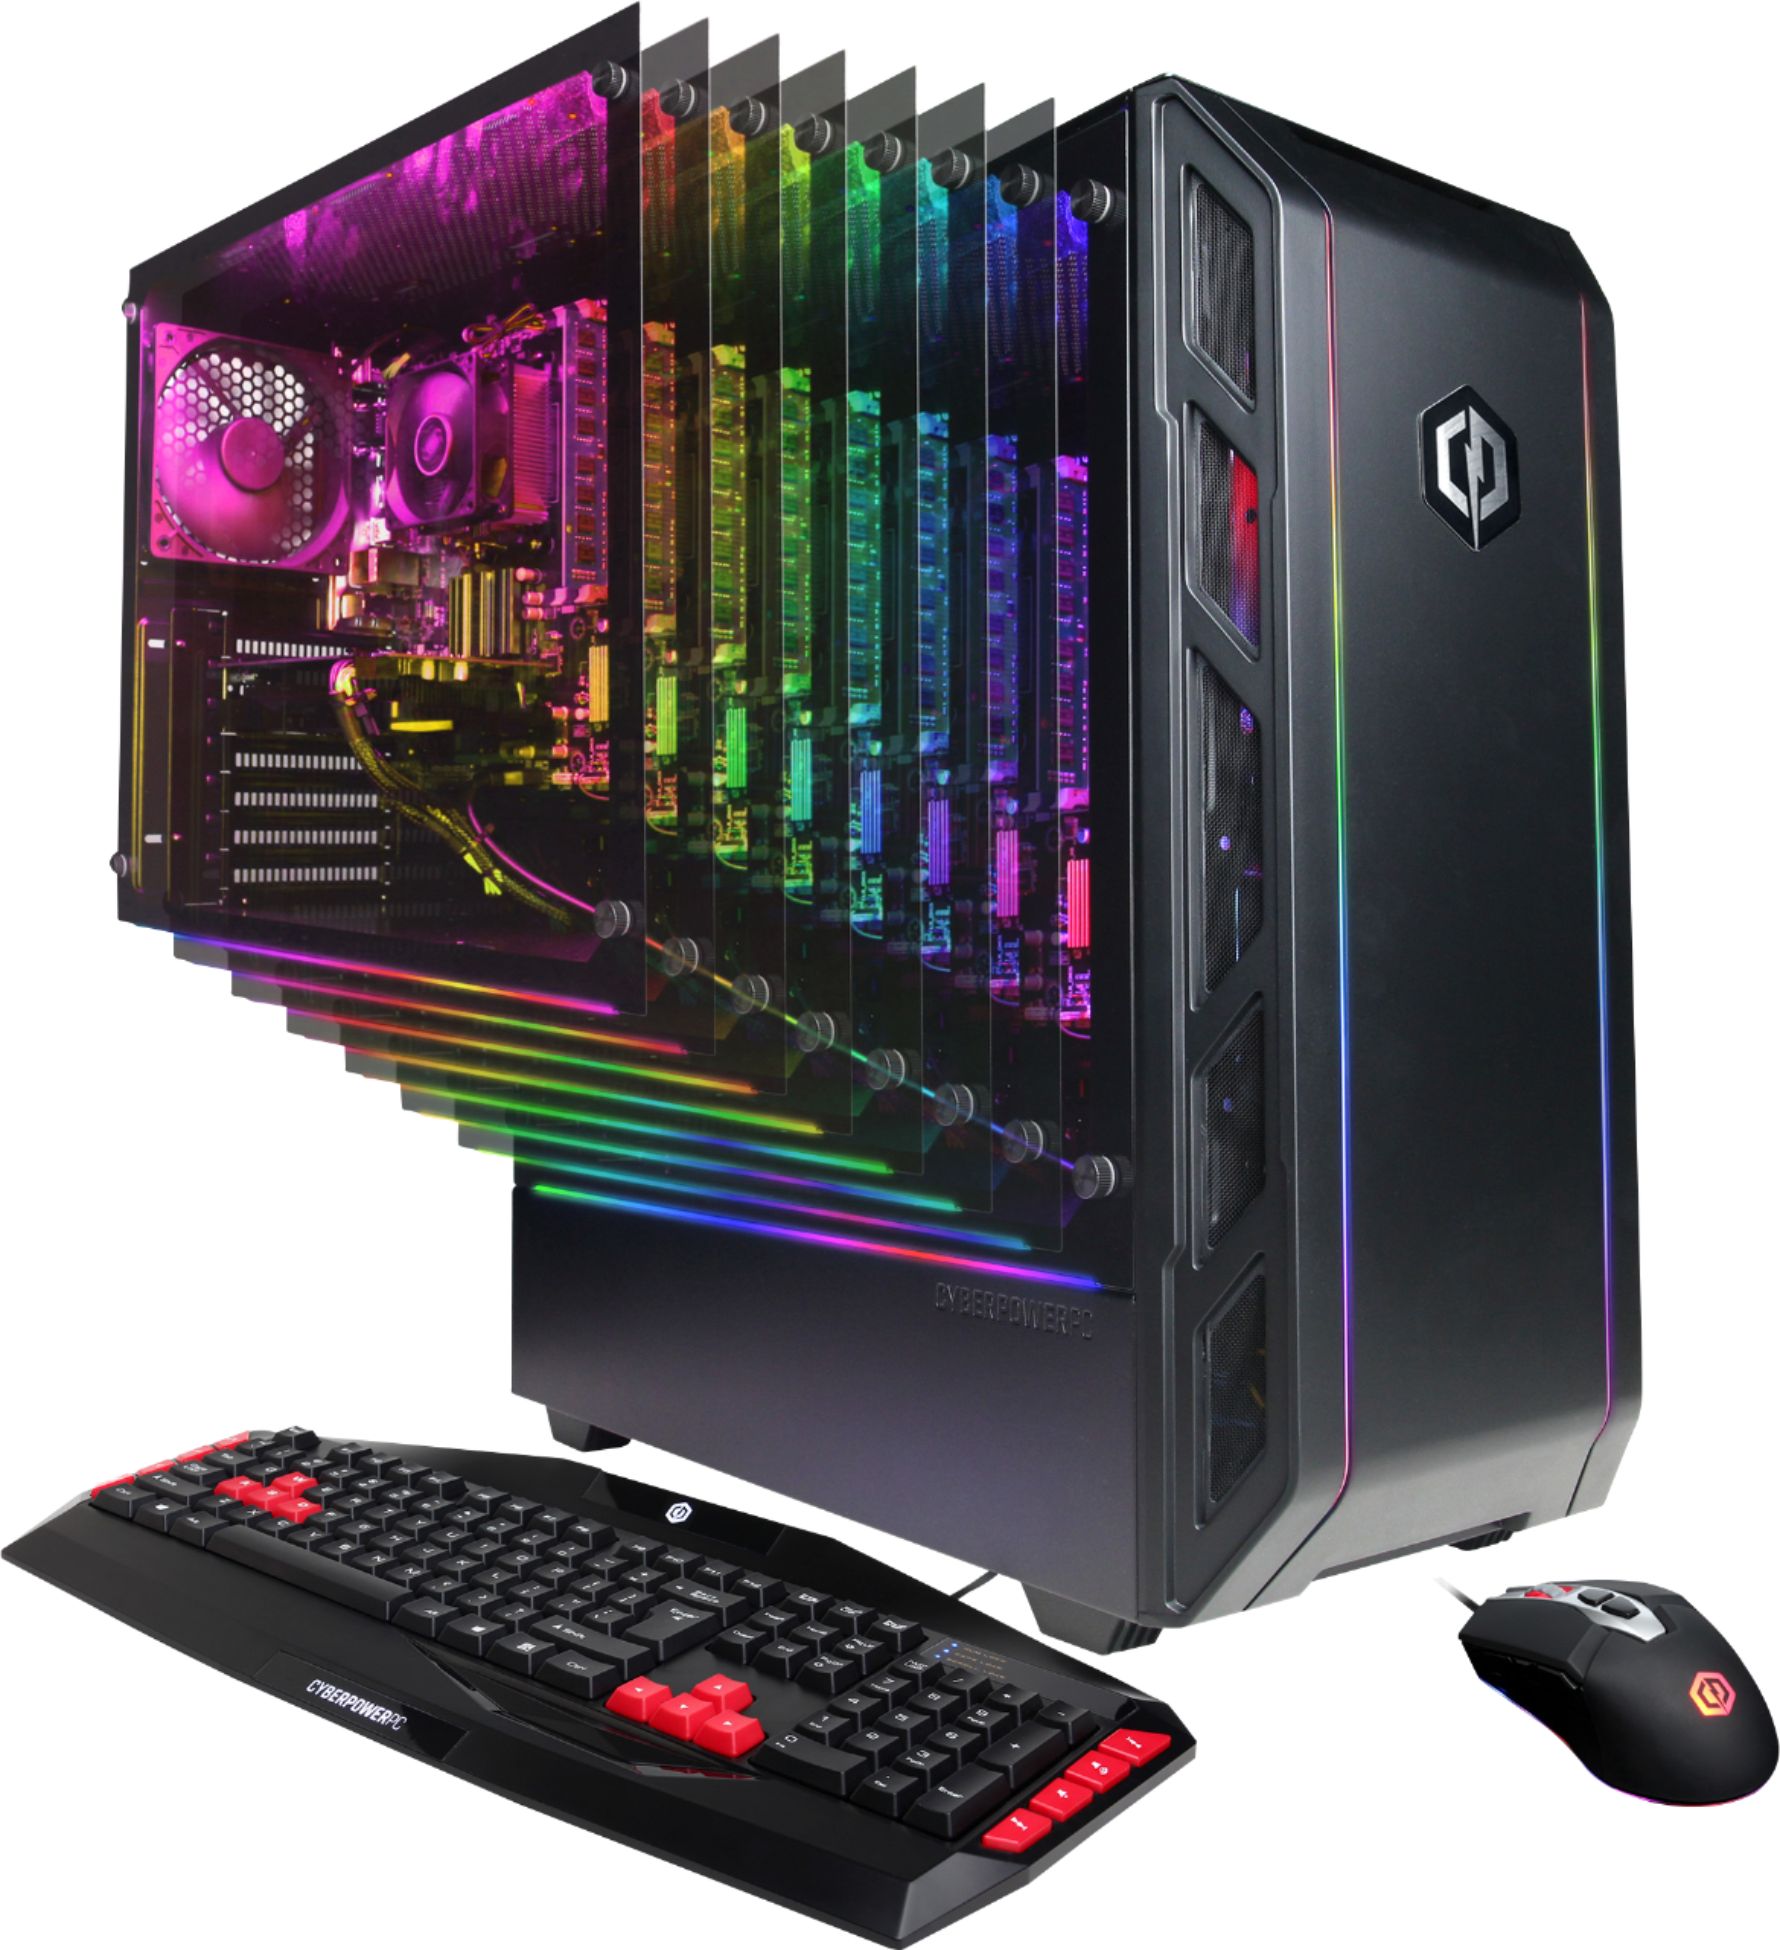 CyberPowerPC Gaming Desktop AMD FX 6300 